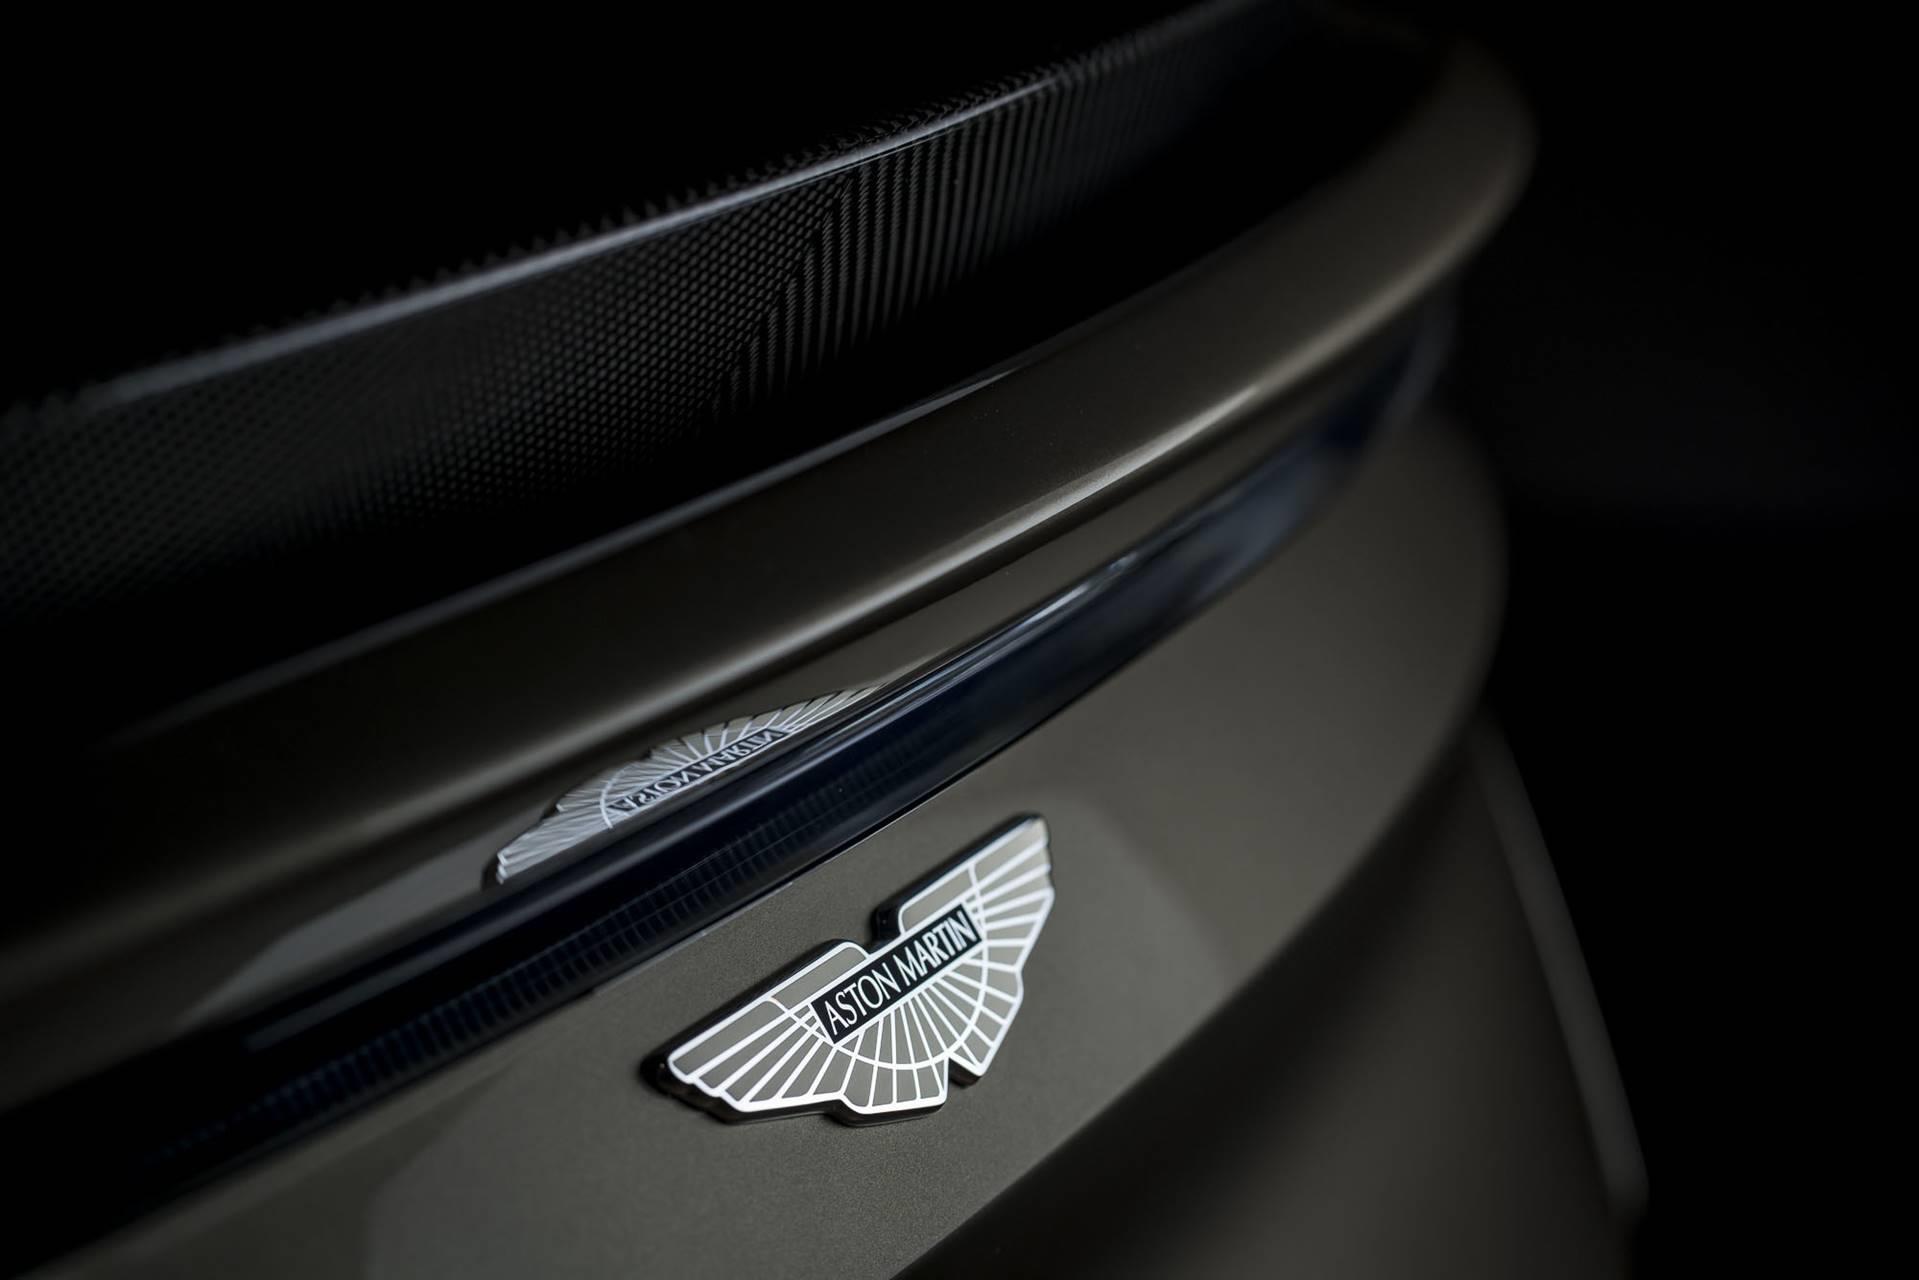 2019 Aston Martin DBS Superleggera On Her Majestys Secret Service